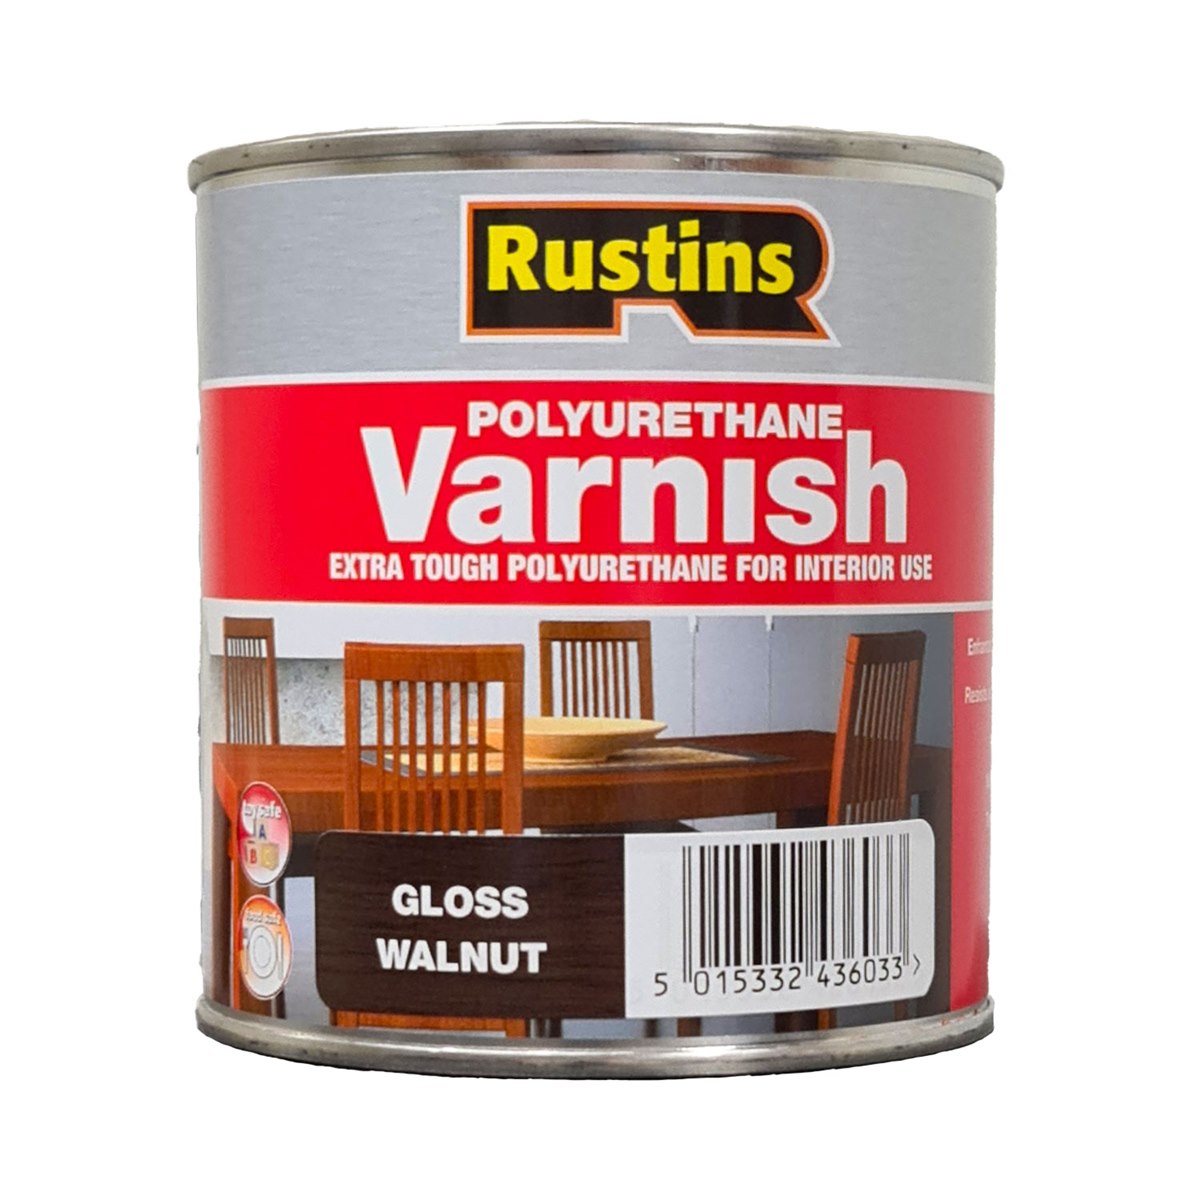 Rustins Polyurethane Varnish Gloss Walnut 1 Litre